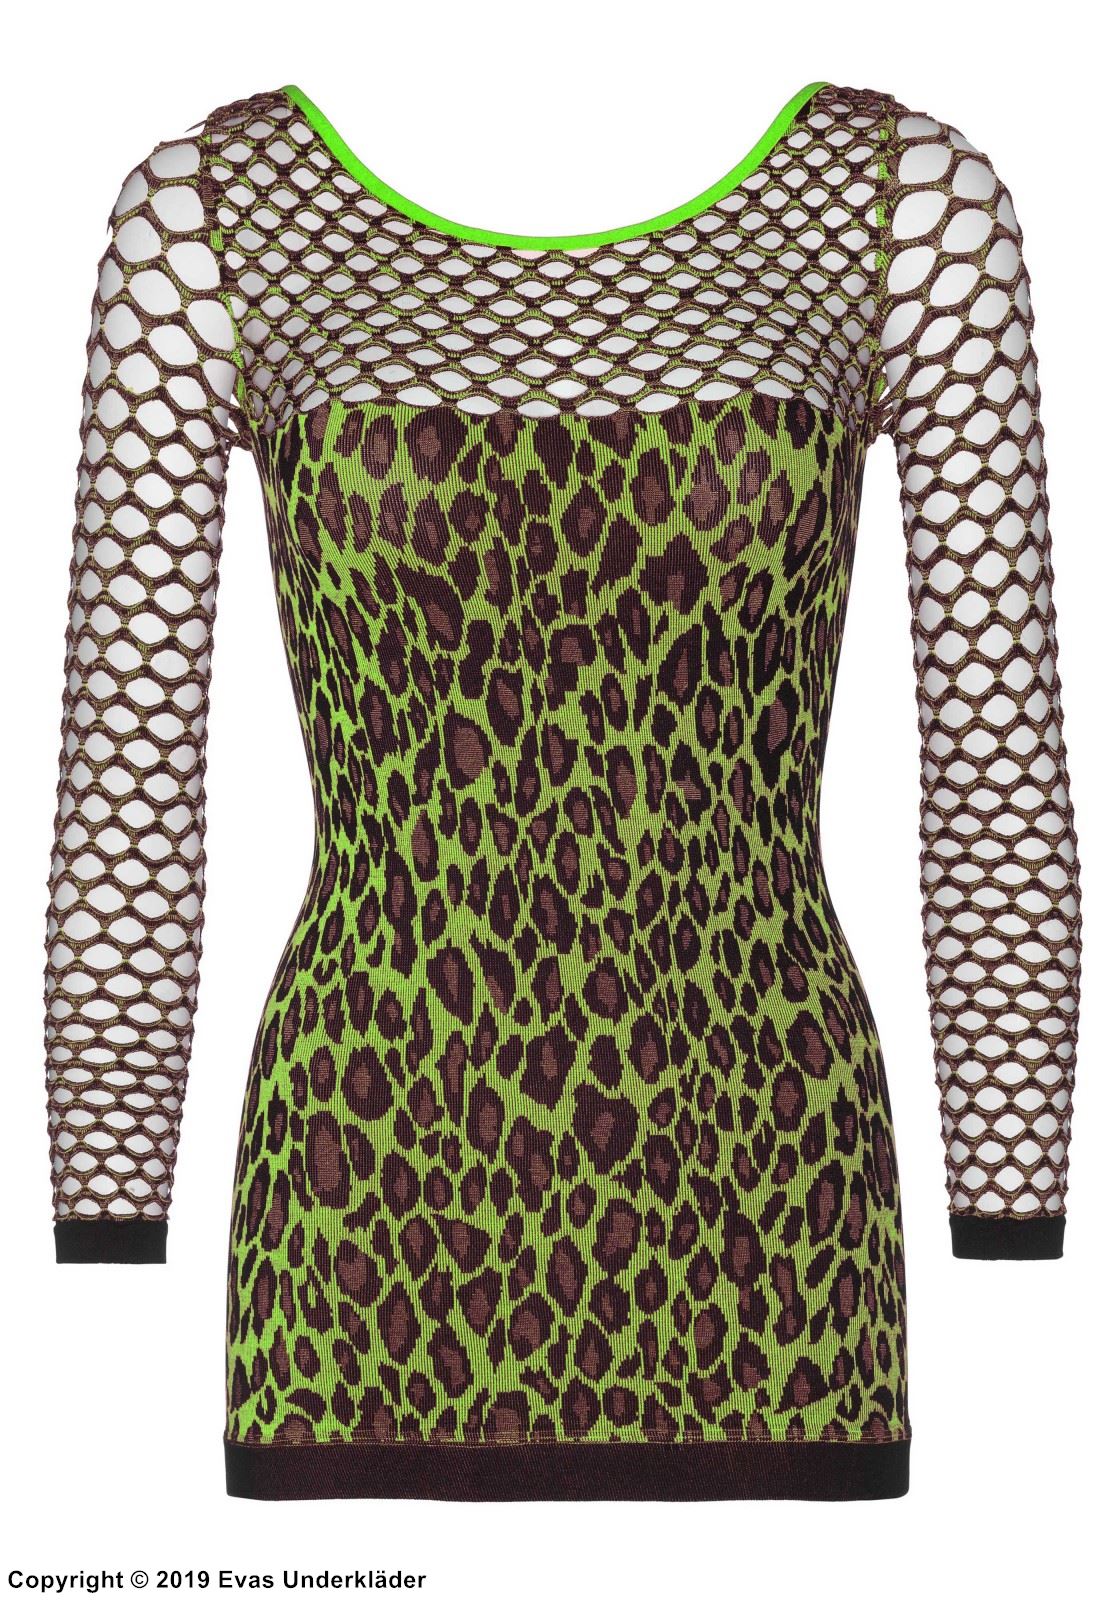 Seamless leopard mini dress with diamond net, plus size